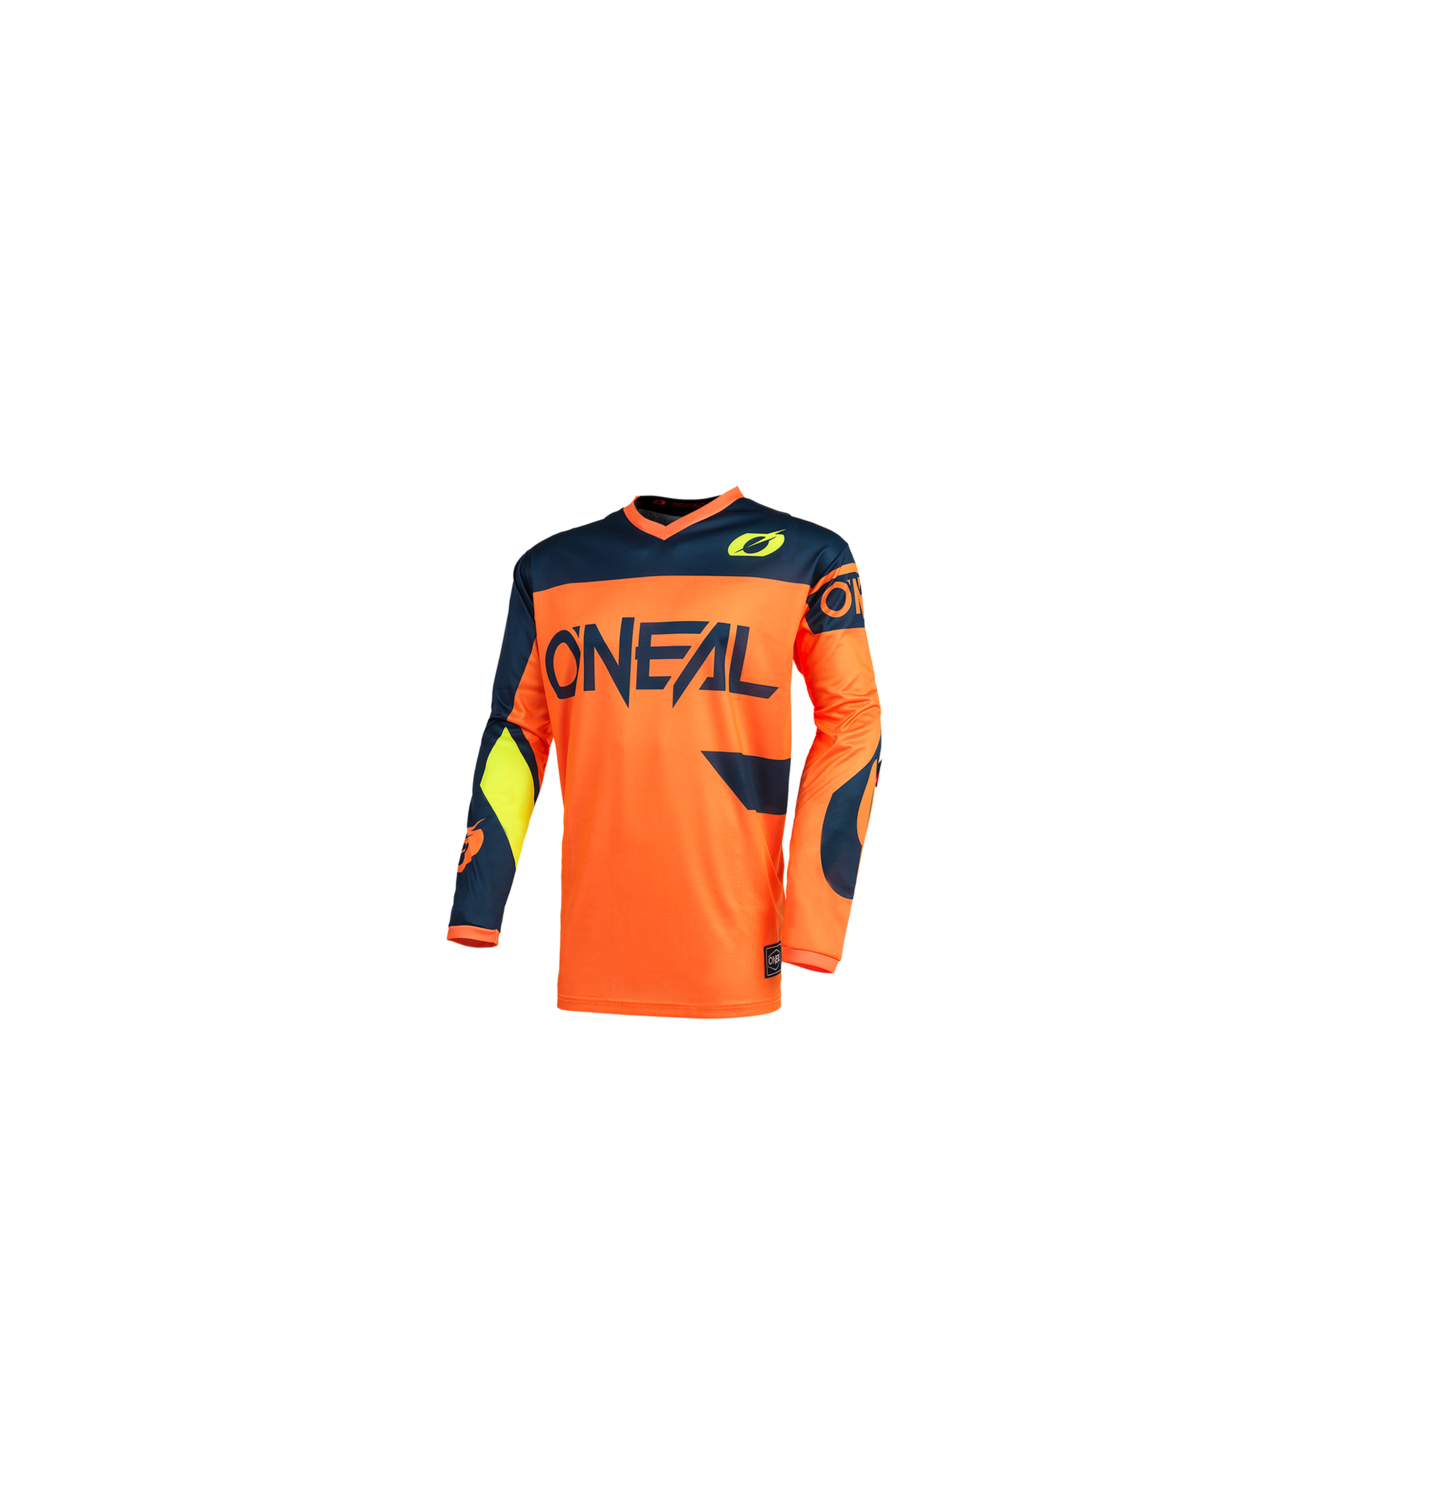 <span style="font-weight: bold;">Джерси O’NEAL Element Racewear 21, мужской(ие) (оранжевый/синий)</span><br>